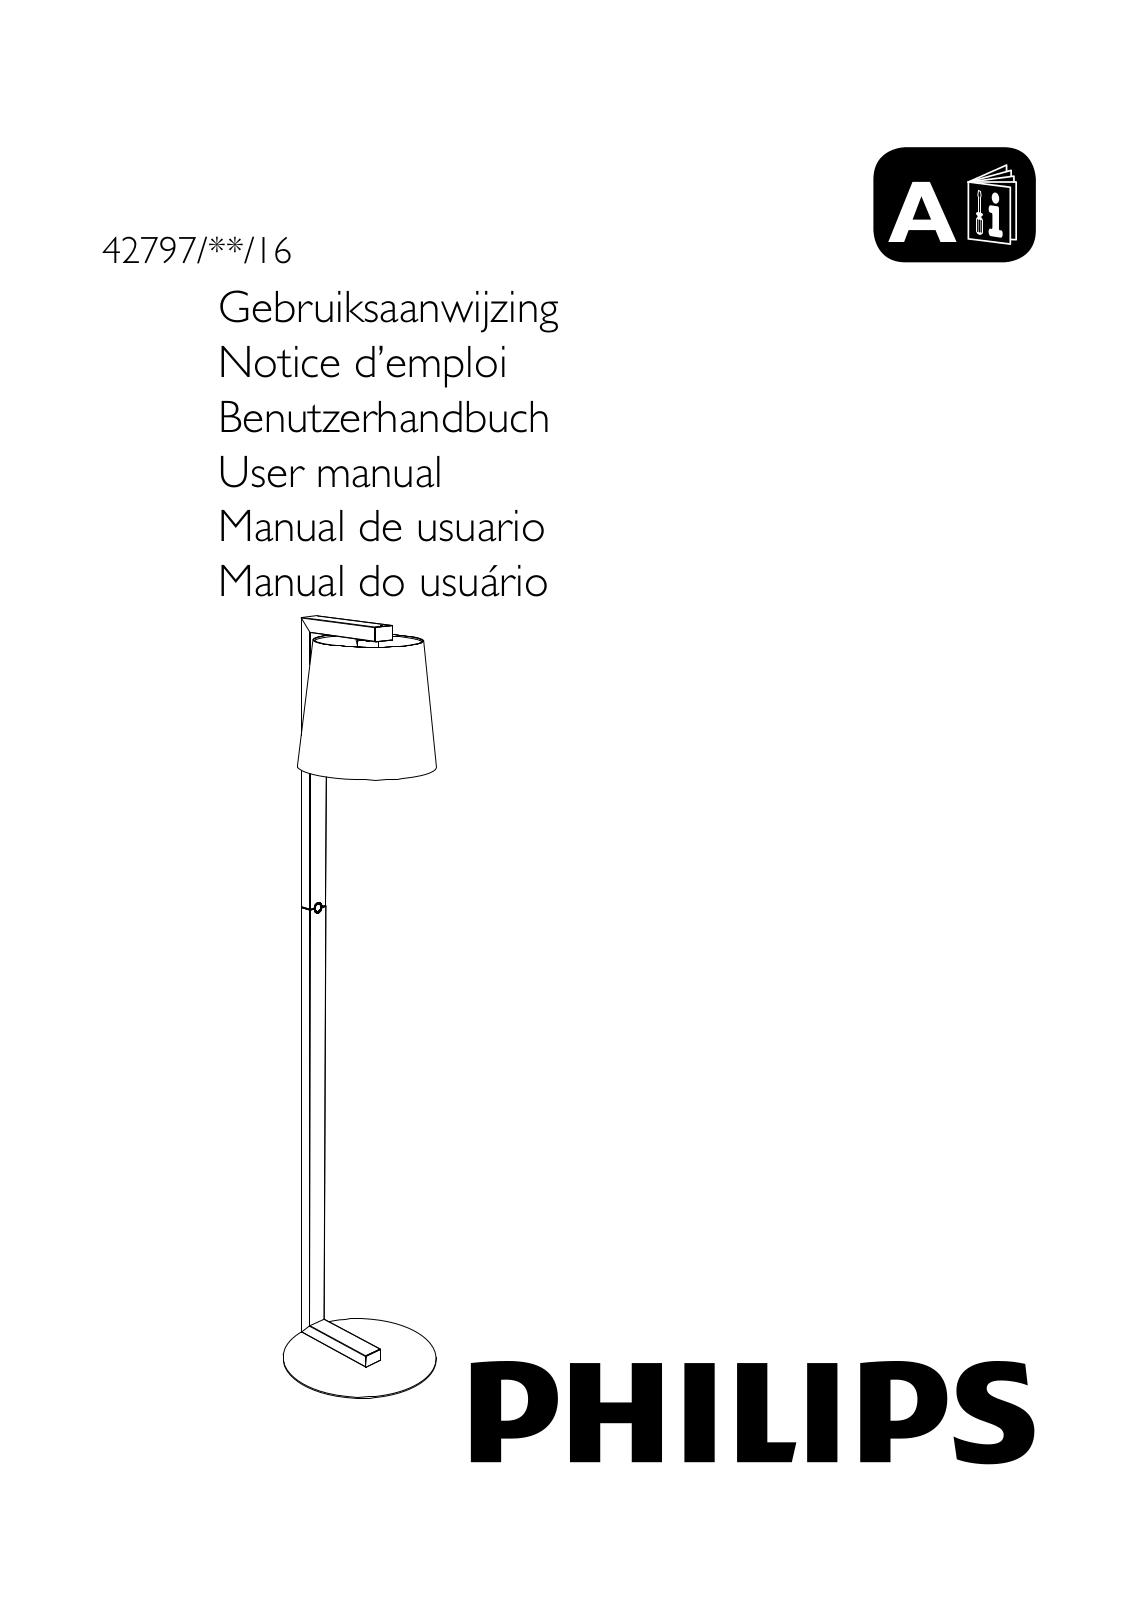 Philips 42797-86-16, 42797-26-16 User Manual